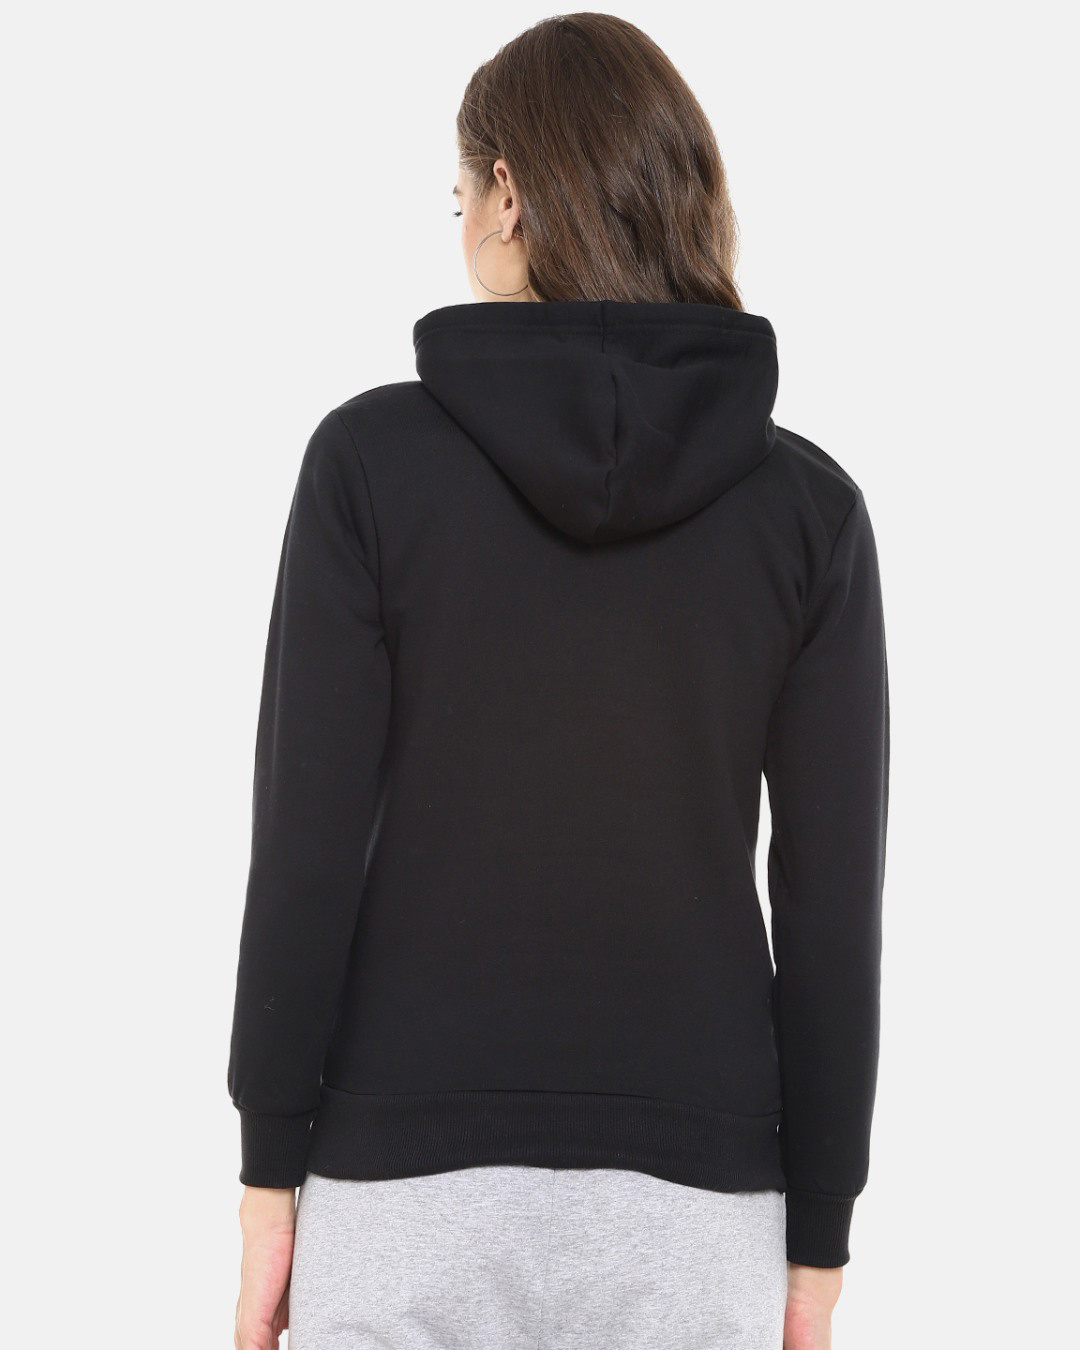 Shop Women's Black Typography Stylish Casual Hooded Sweatshirt-Back